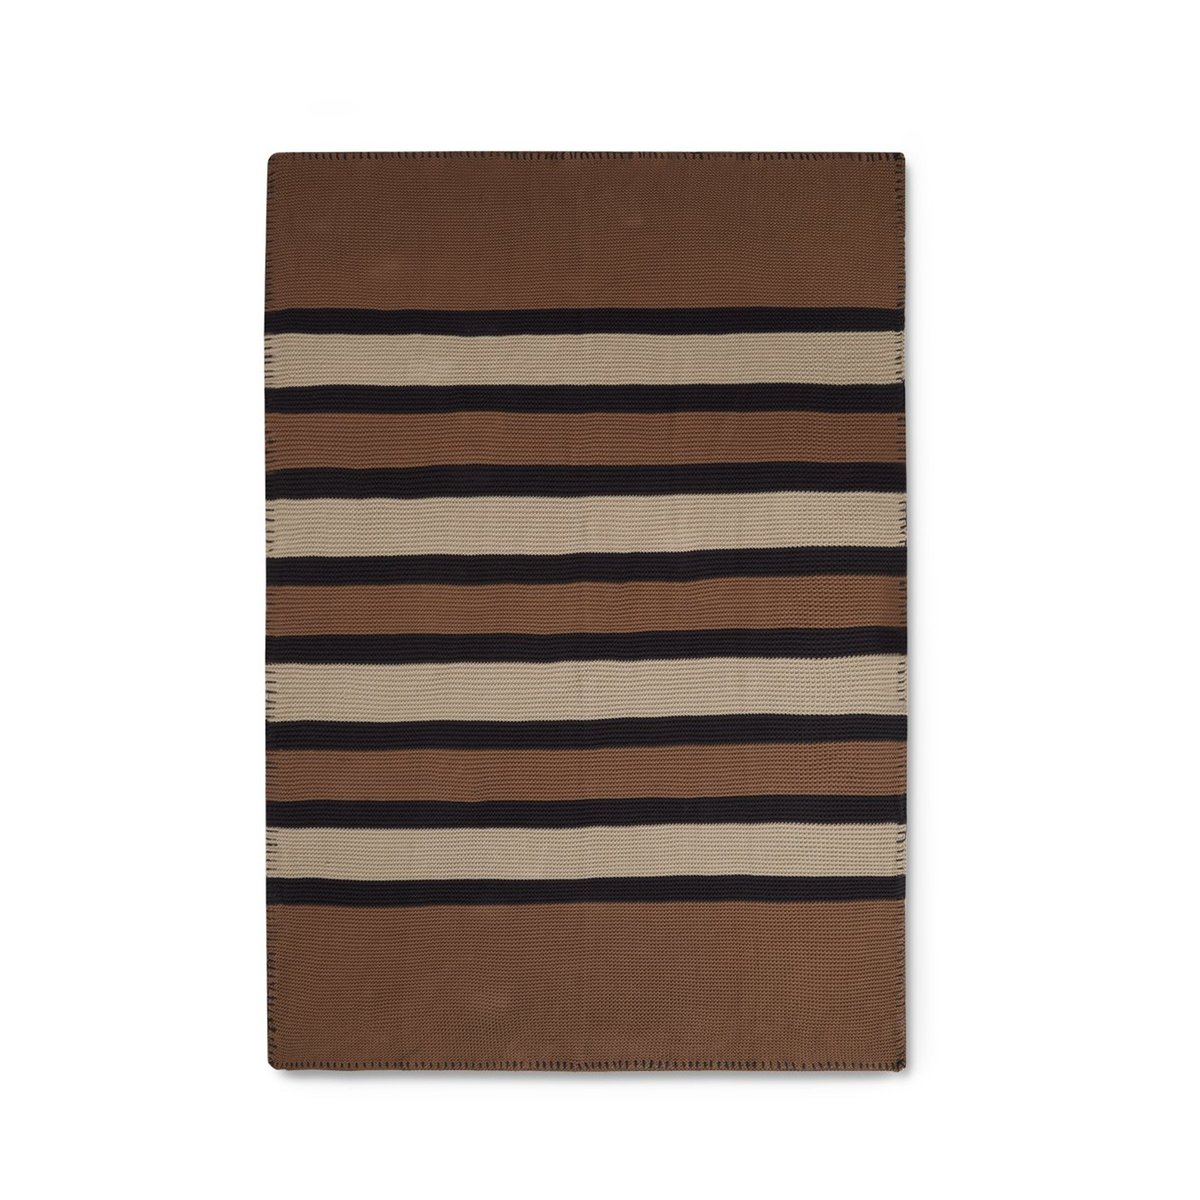 Bilde av Lexington Striped Knitted Cotton pledd 130 x 170 cm Brown-beige-dark gray